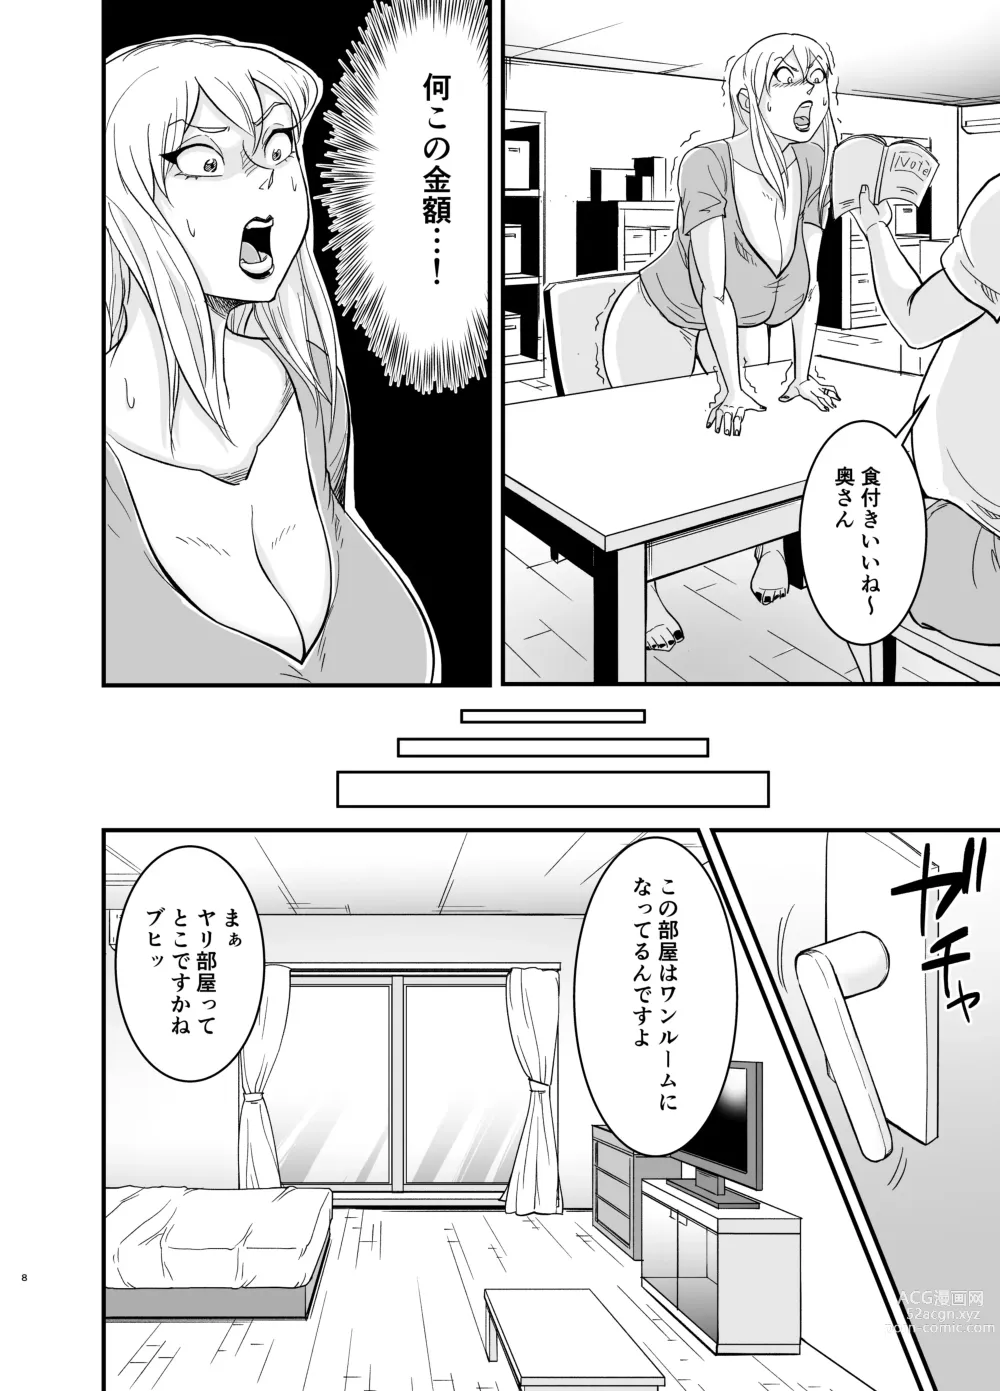 Page 9 of doujinshi Marina to Buta